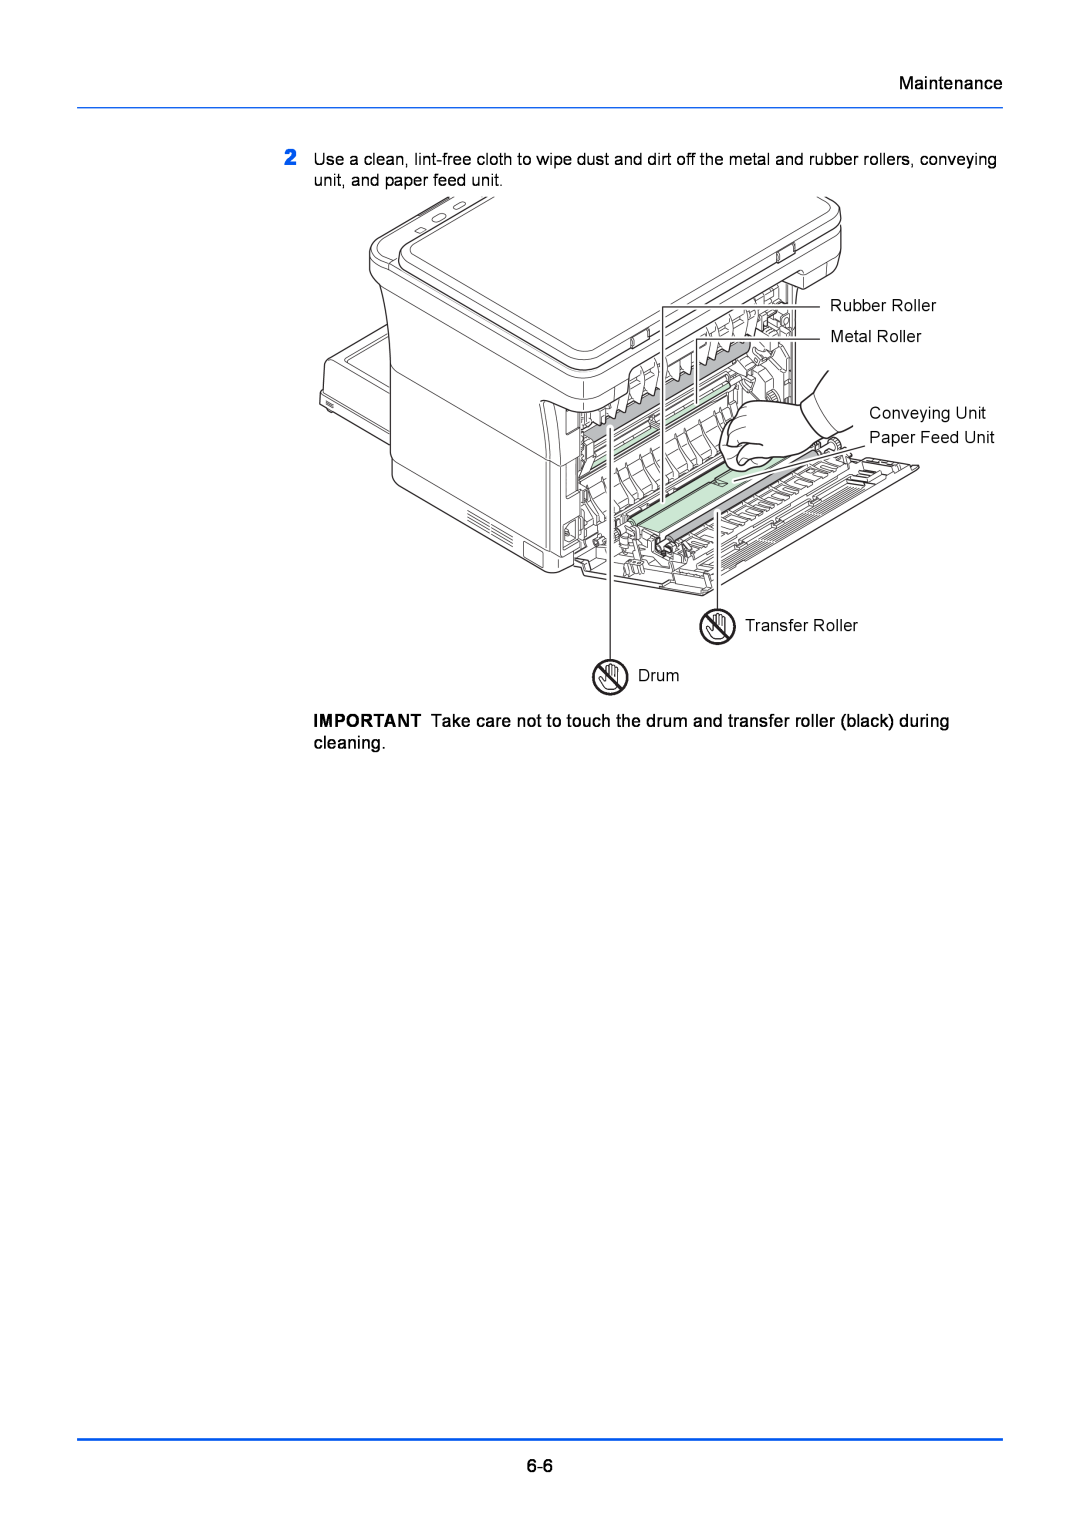 Kyocera FS-1020MFP manual Maintenance, Rubber Roller Metal Roller Conveying Unit Paper Feed Unit, Transfer Roller Drum 